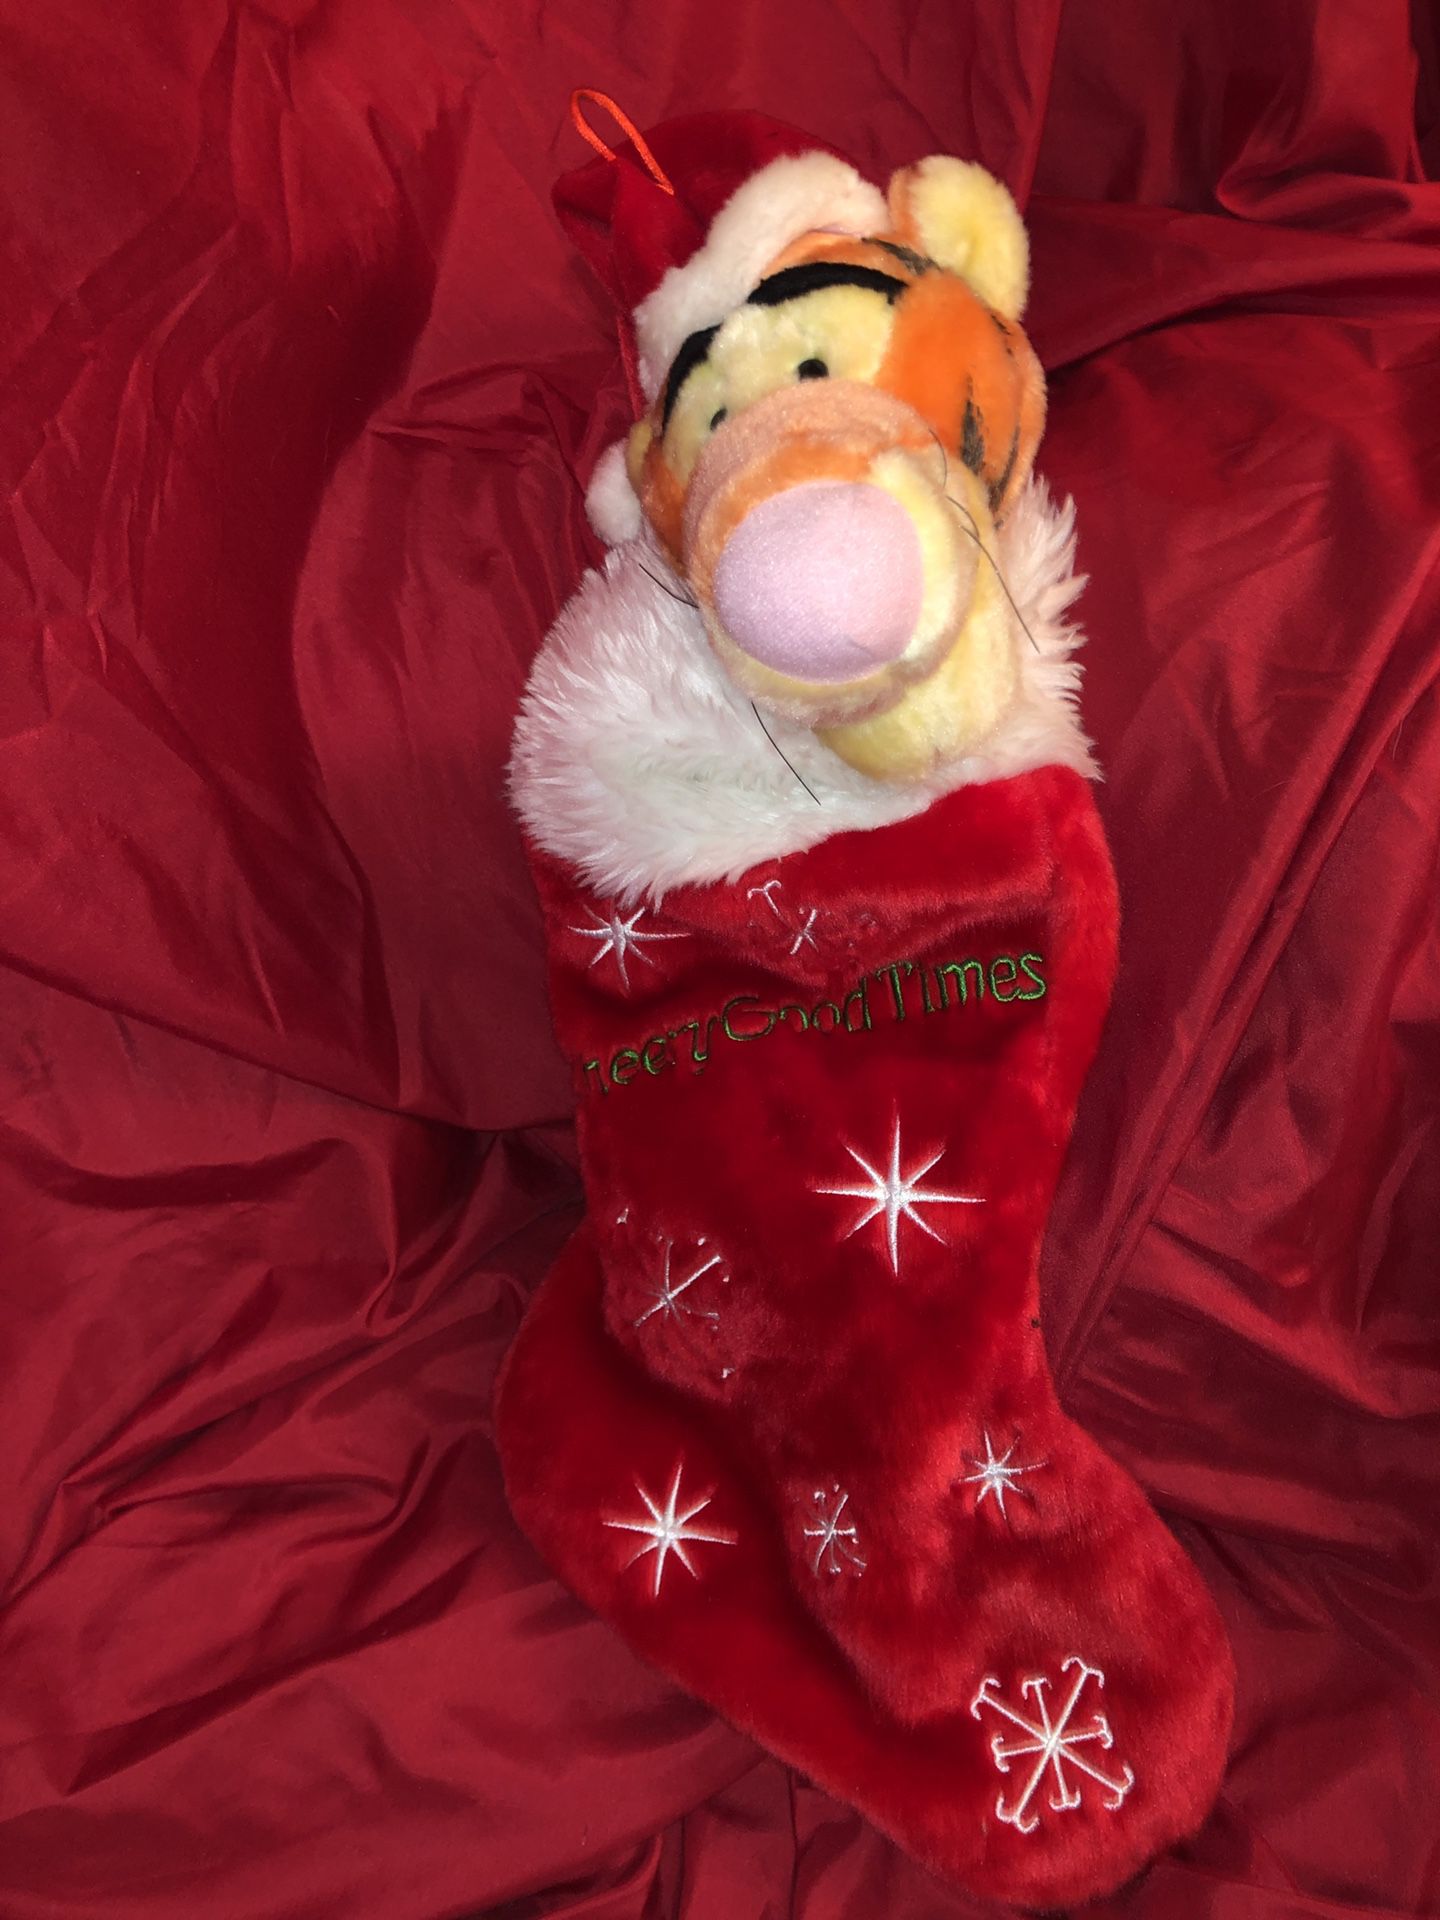 Disney Winnie the Pooh (Tigger) plush Christmas stocking ! Santa is wearing a red Santa Claus hat! This is battery operated plush Christmas stocking